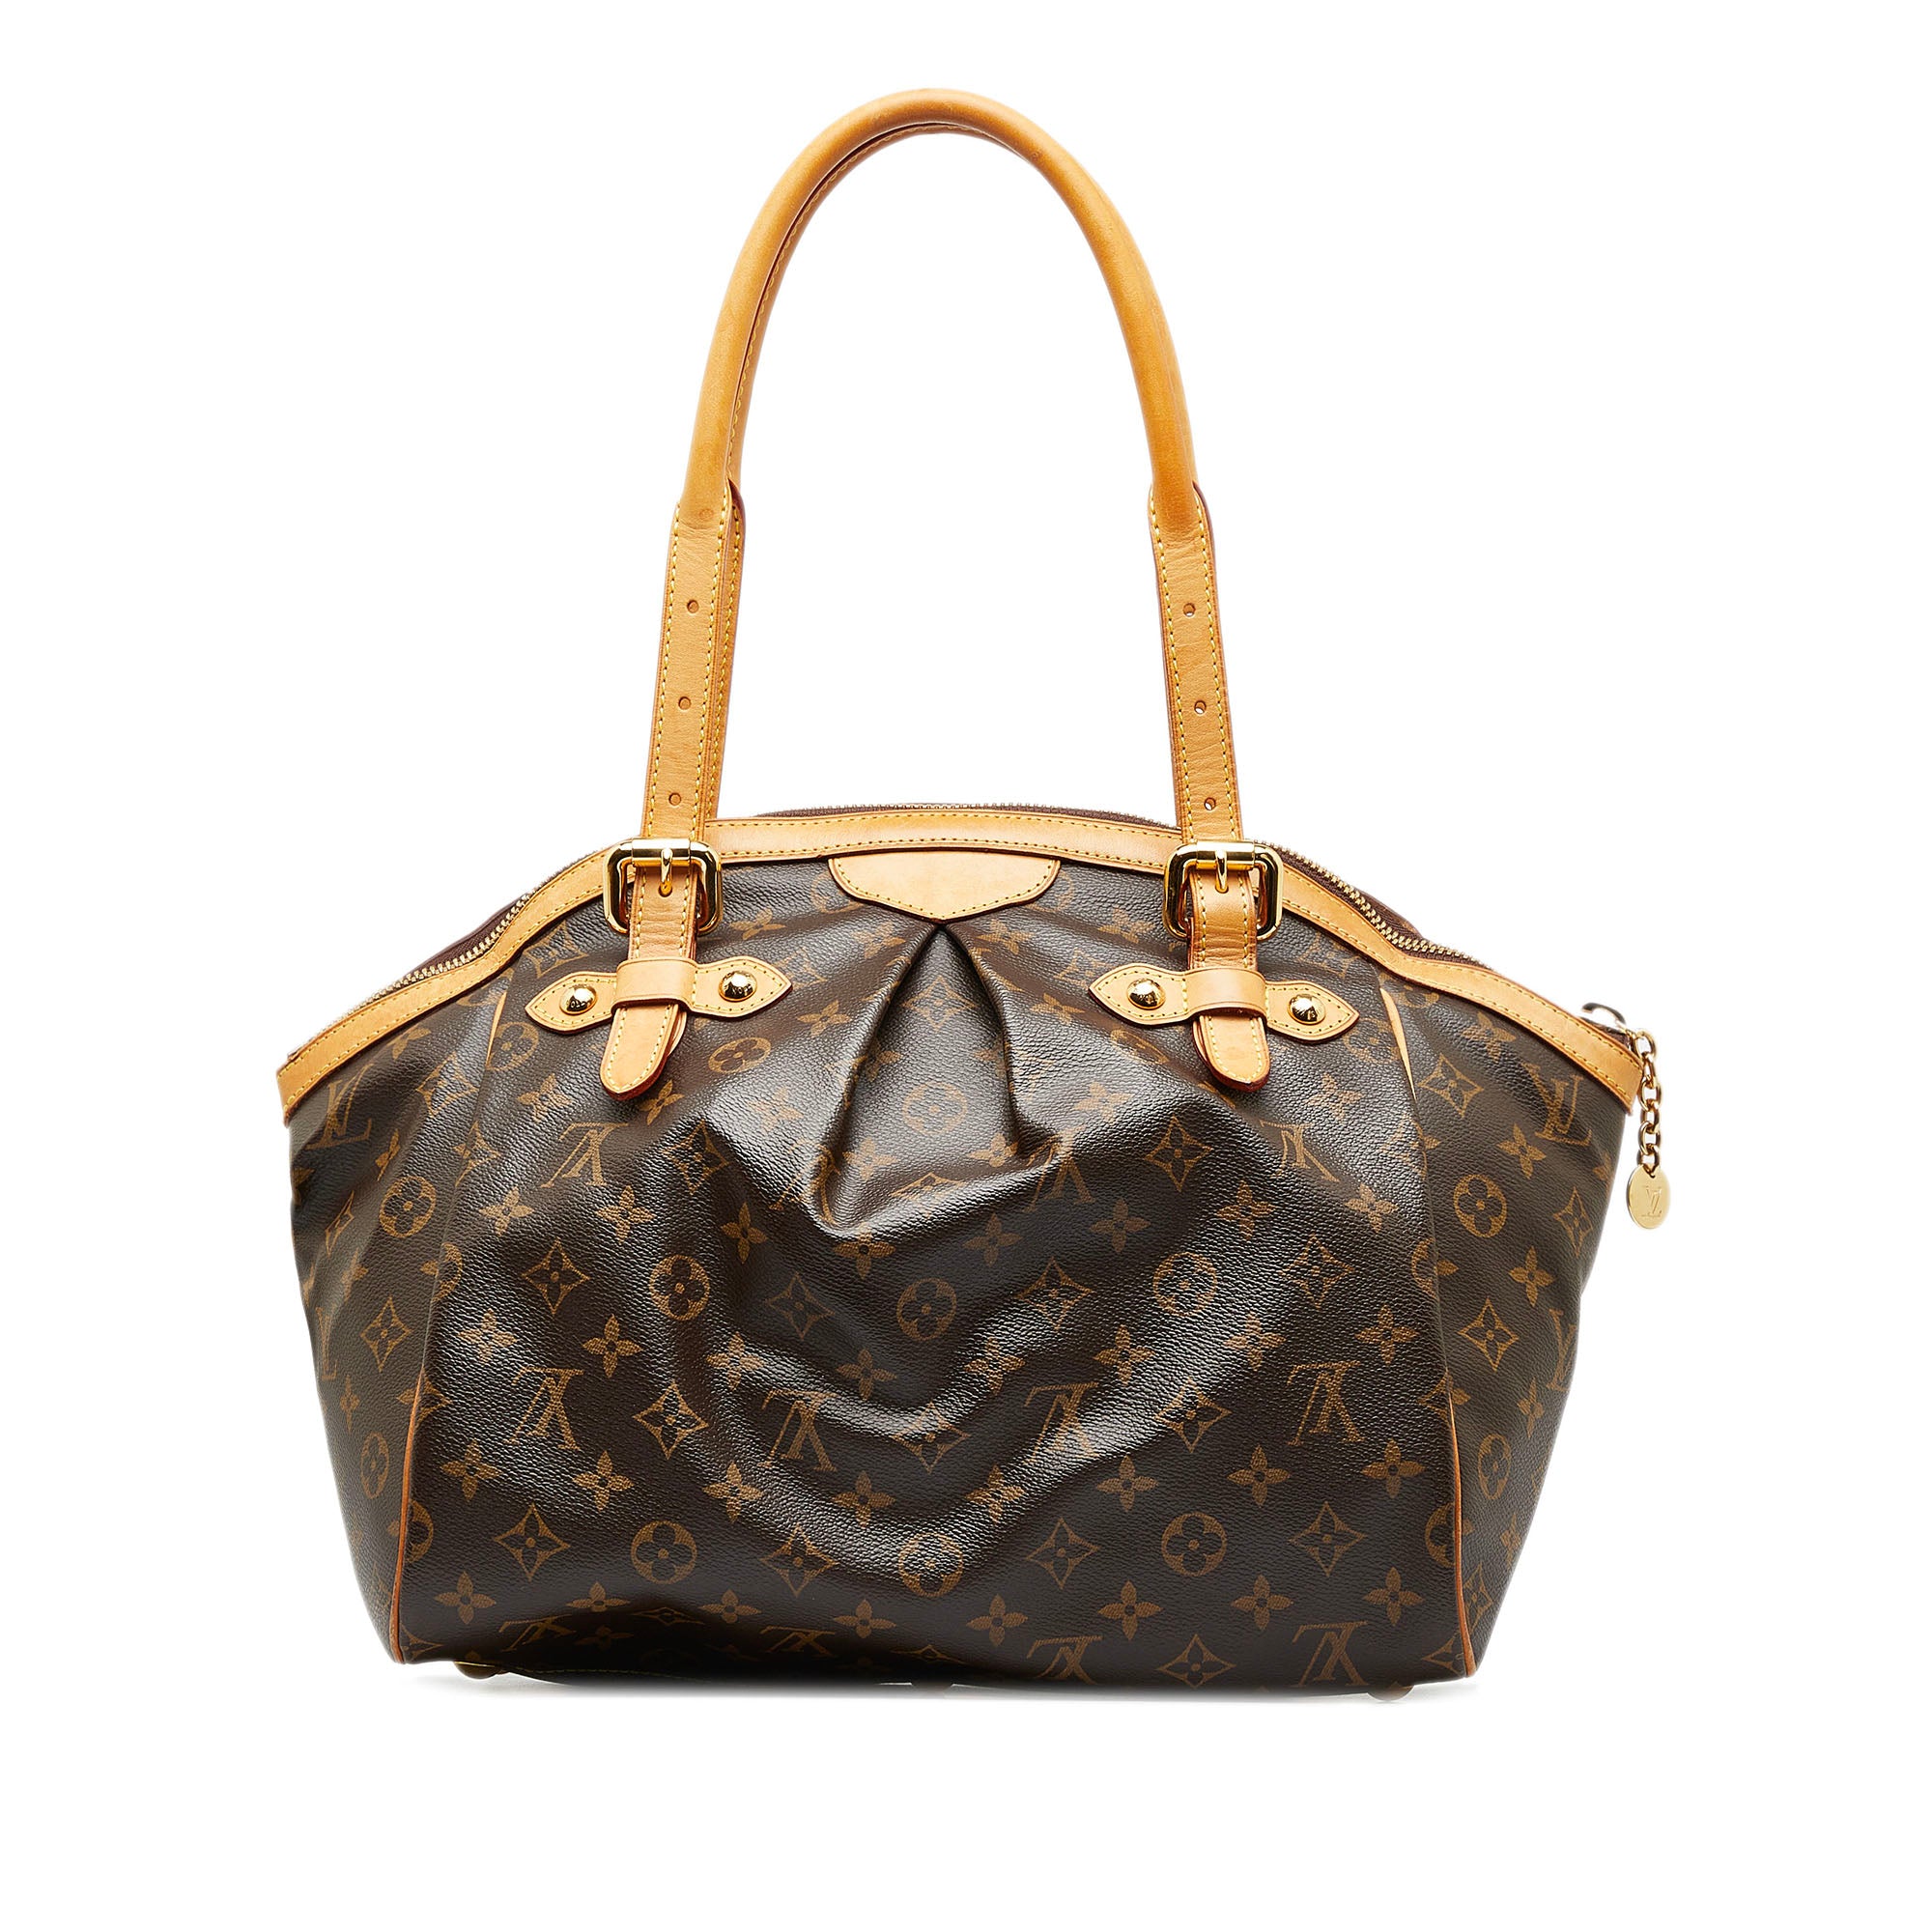 We Bought Louis Vuitton Tivoli GM Monogram Shoulder Bag